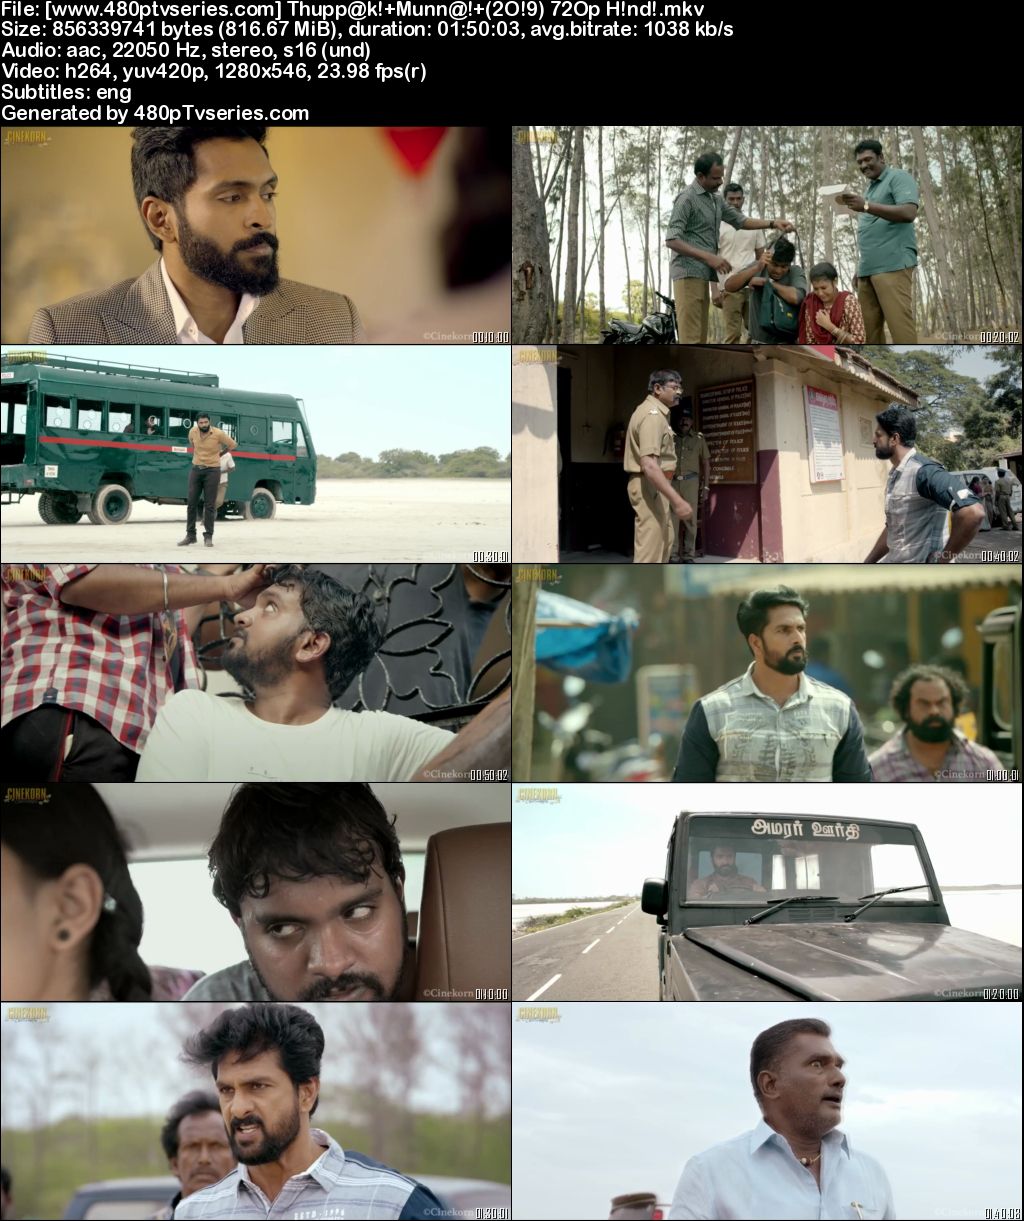 Thuppaki Munai (2019) Full Hindi Dubbed Movie Download 480p 720p HDRip Free Watch Online Full Movie Download Worldfree4u 9xmovies